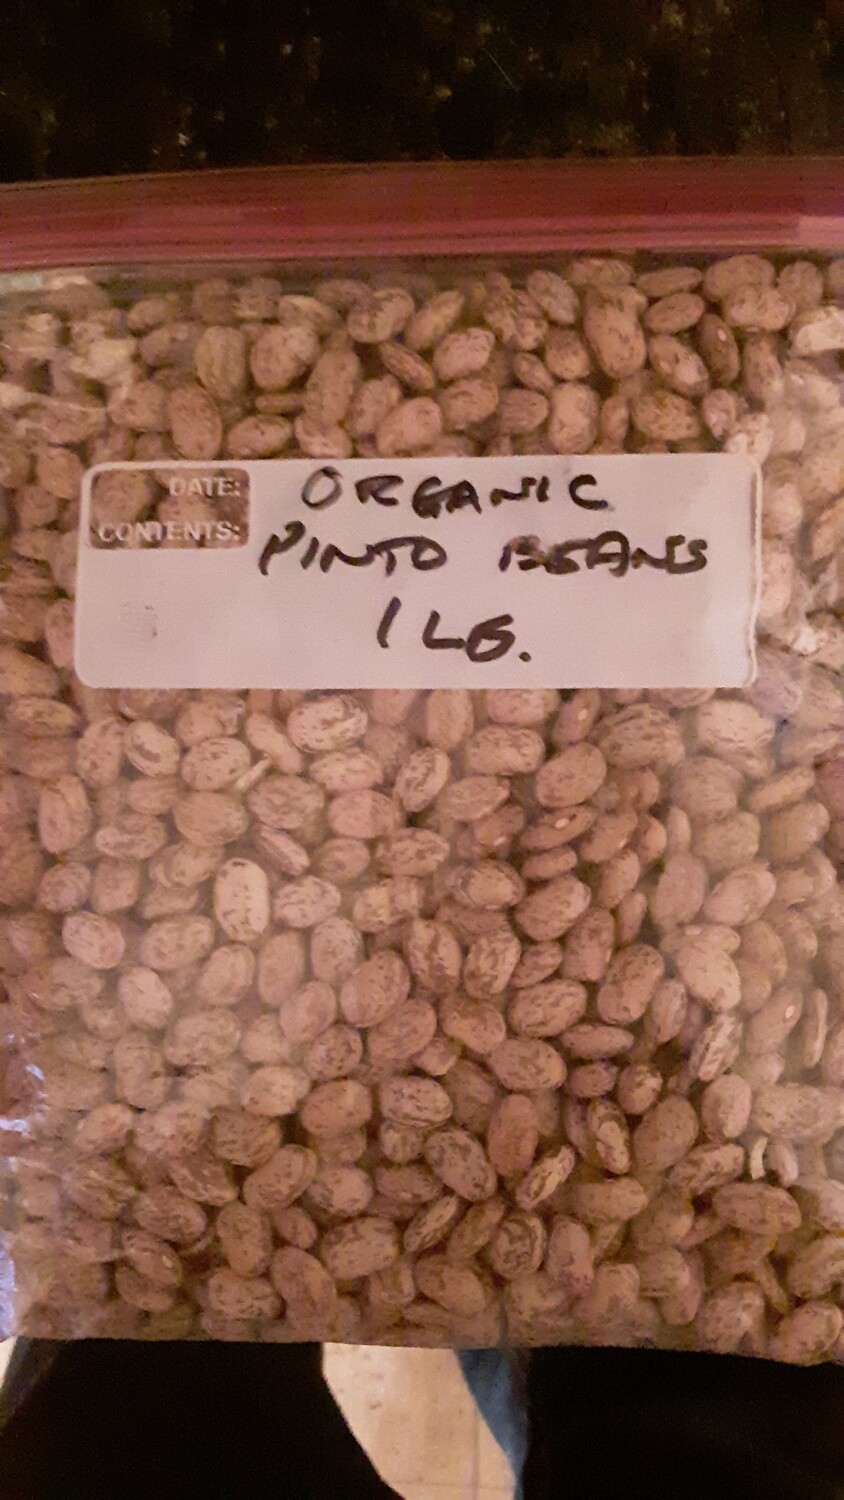 Genesee Valley Bean organic pinto beans, 1 lb